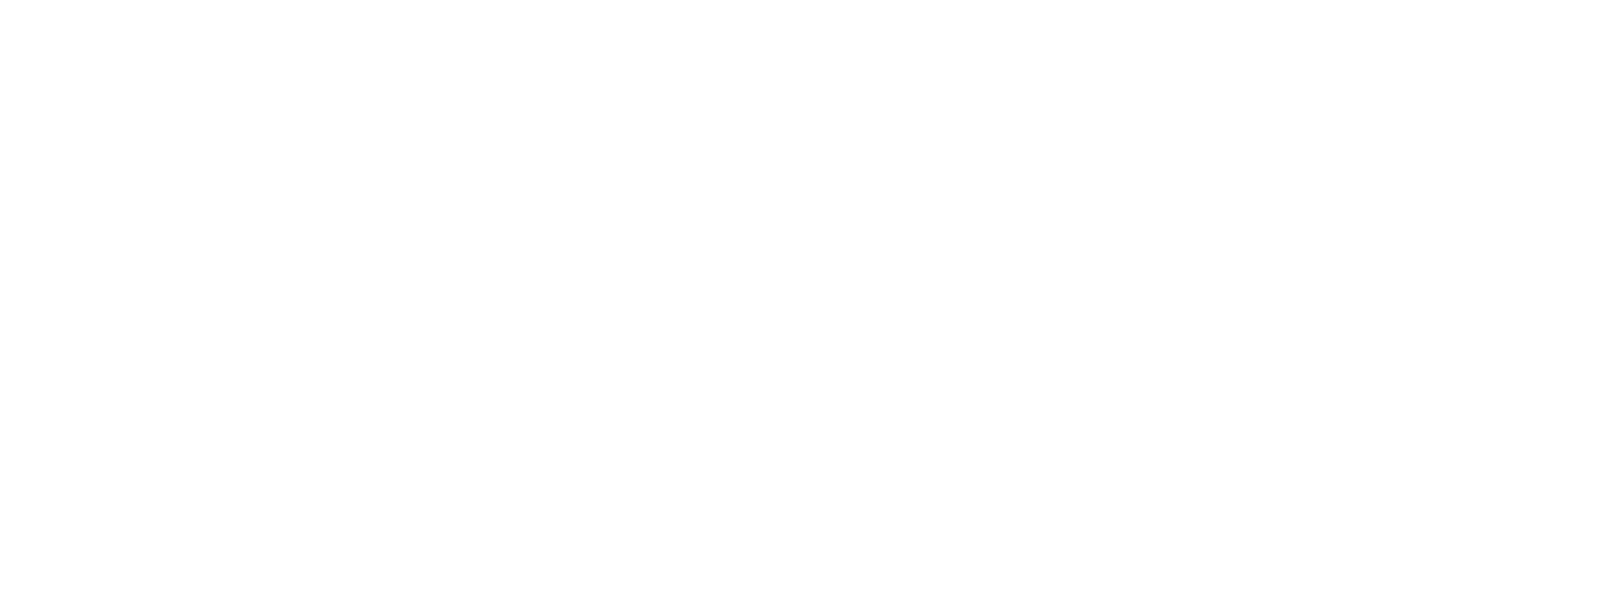 United Bank LPL Financial Logo Hero Ad